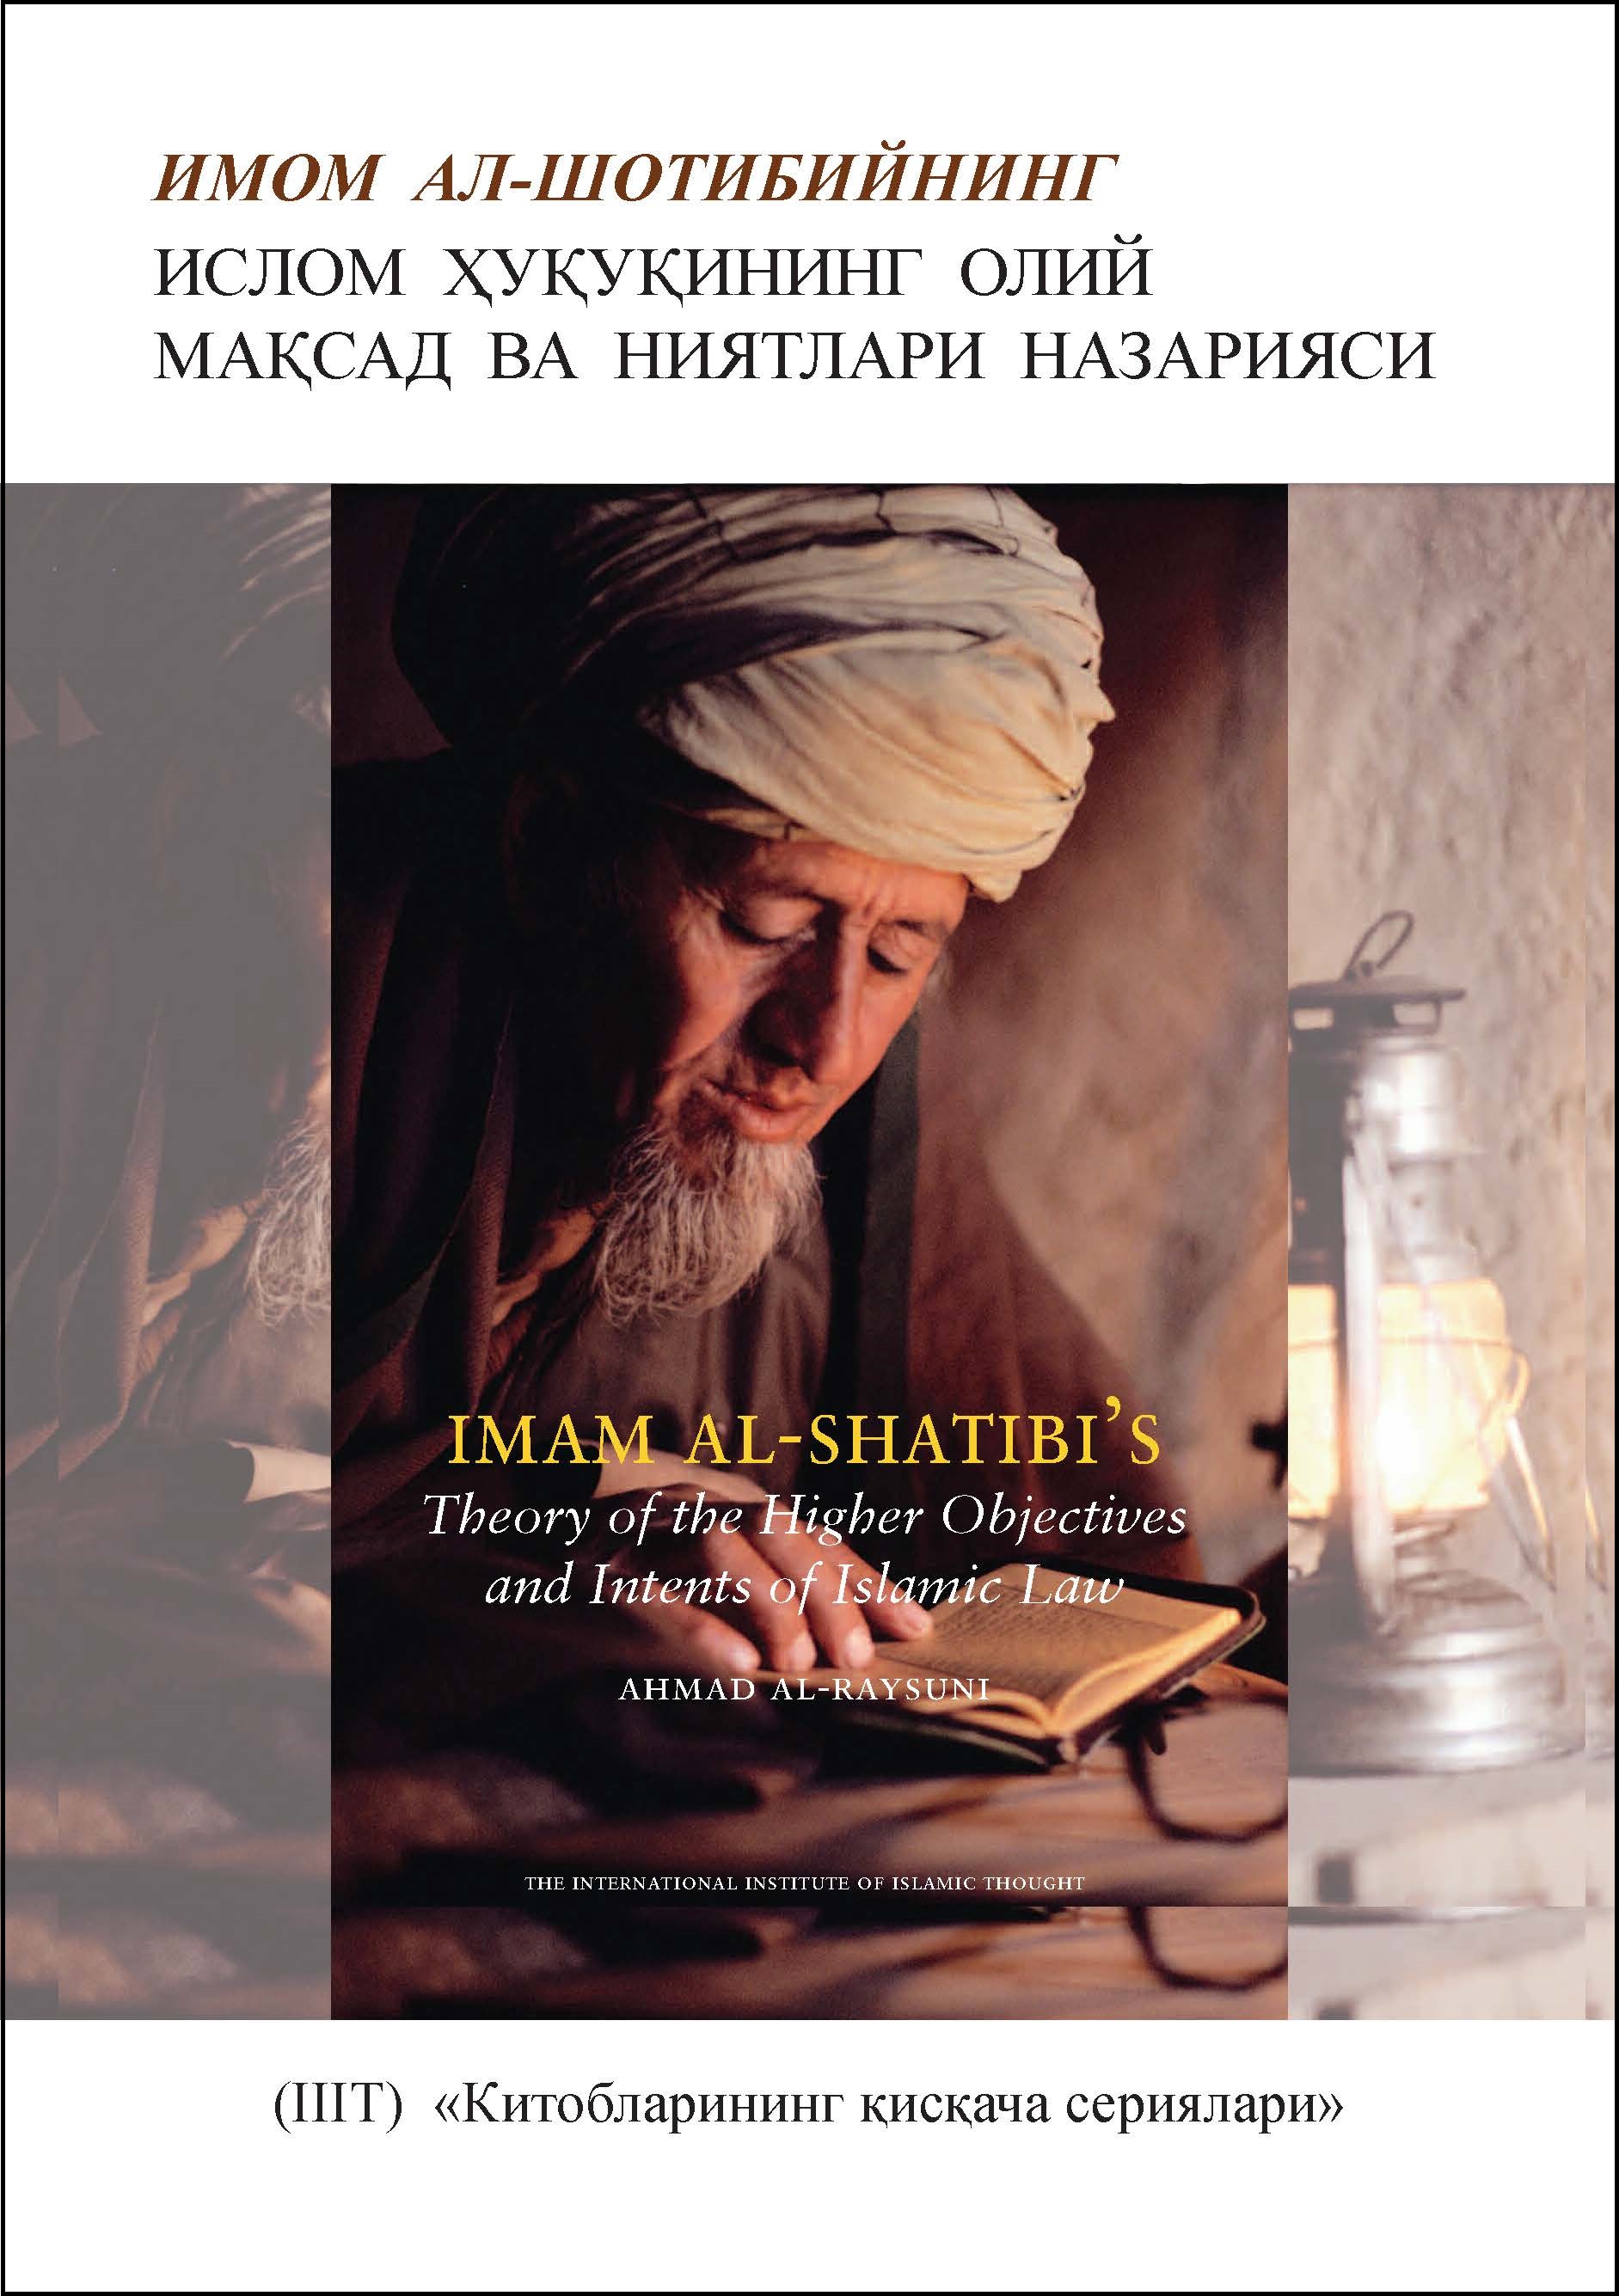 Uzbek: Китобларининг қисқача сериялари: Имом ал-Шотибийнинг Ислом ҳуқуқининг Олий Мақсад ва ниятлари назарияси (Book-in-Brief: Imam Al-Shatibi's Theory of the Higher Objectives and Intents of Islamic Law)